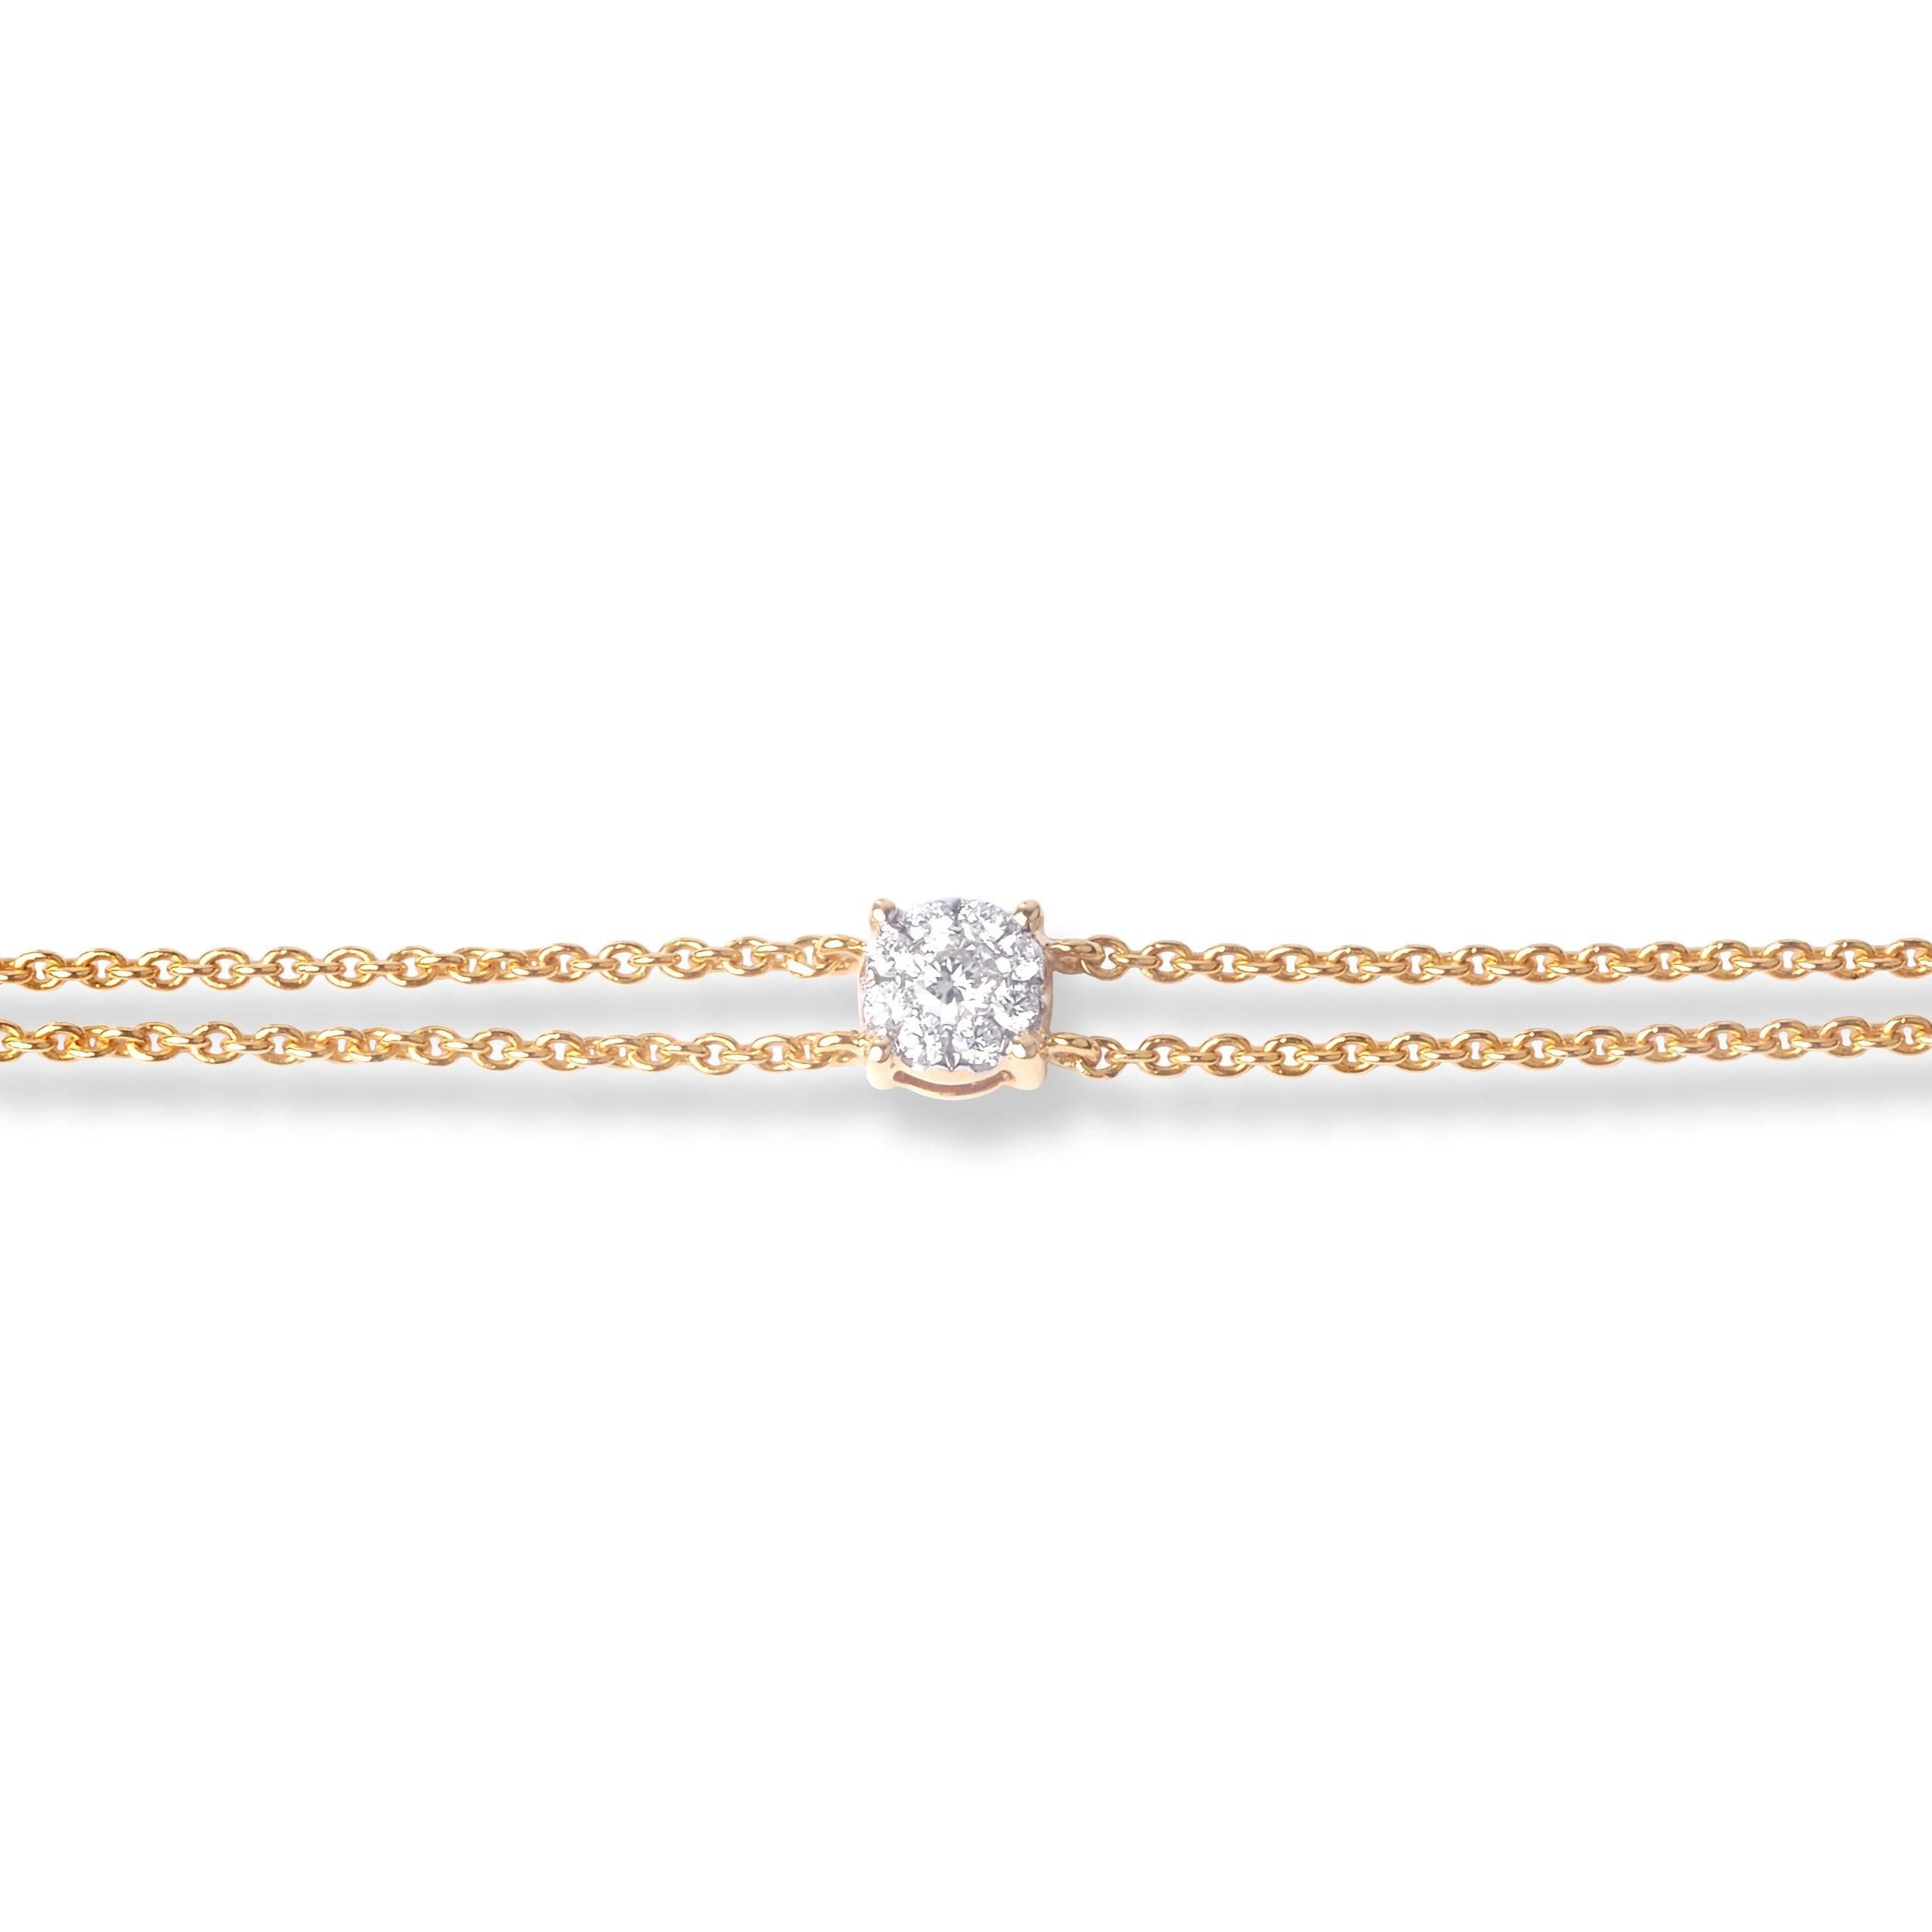 Gold Plated American Diamond Bangles Jewellery Bracelet For Women & Girls 2  Pcs | eBay